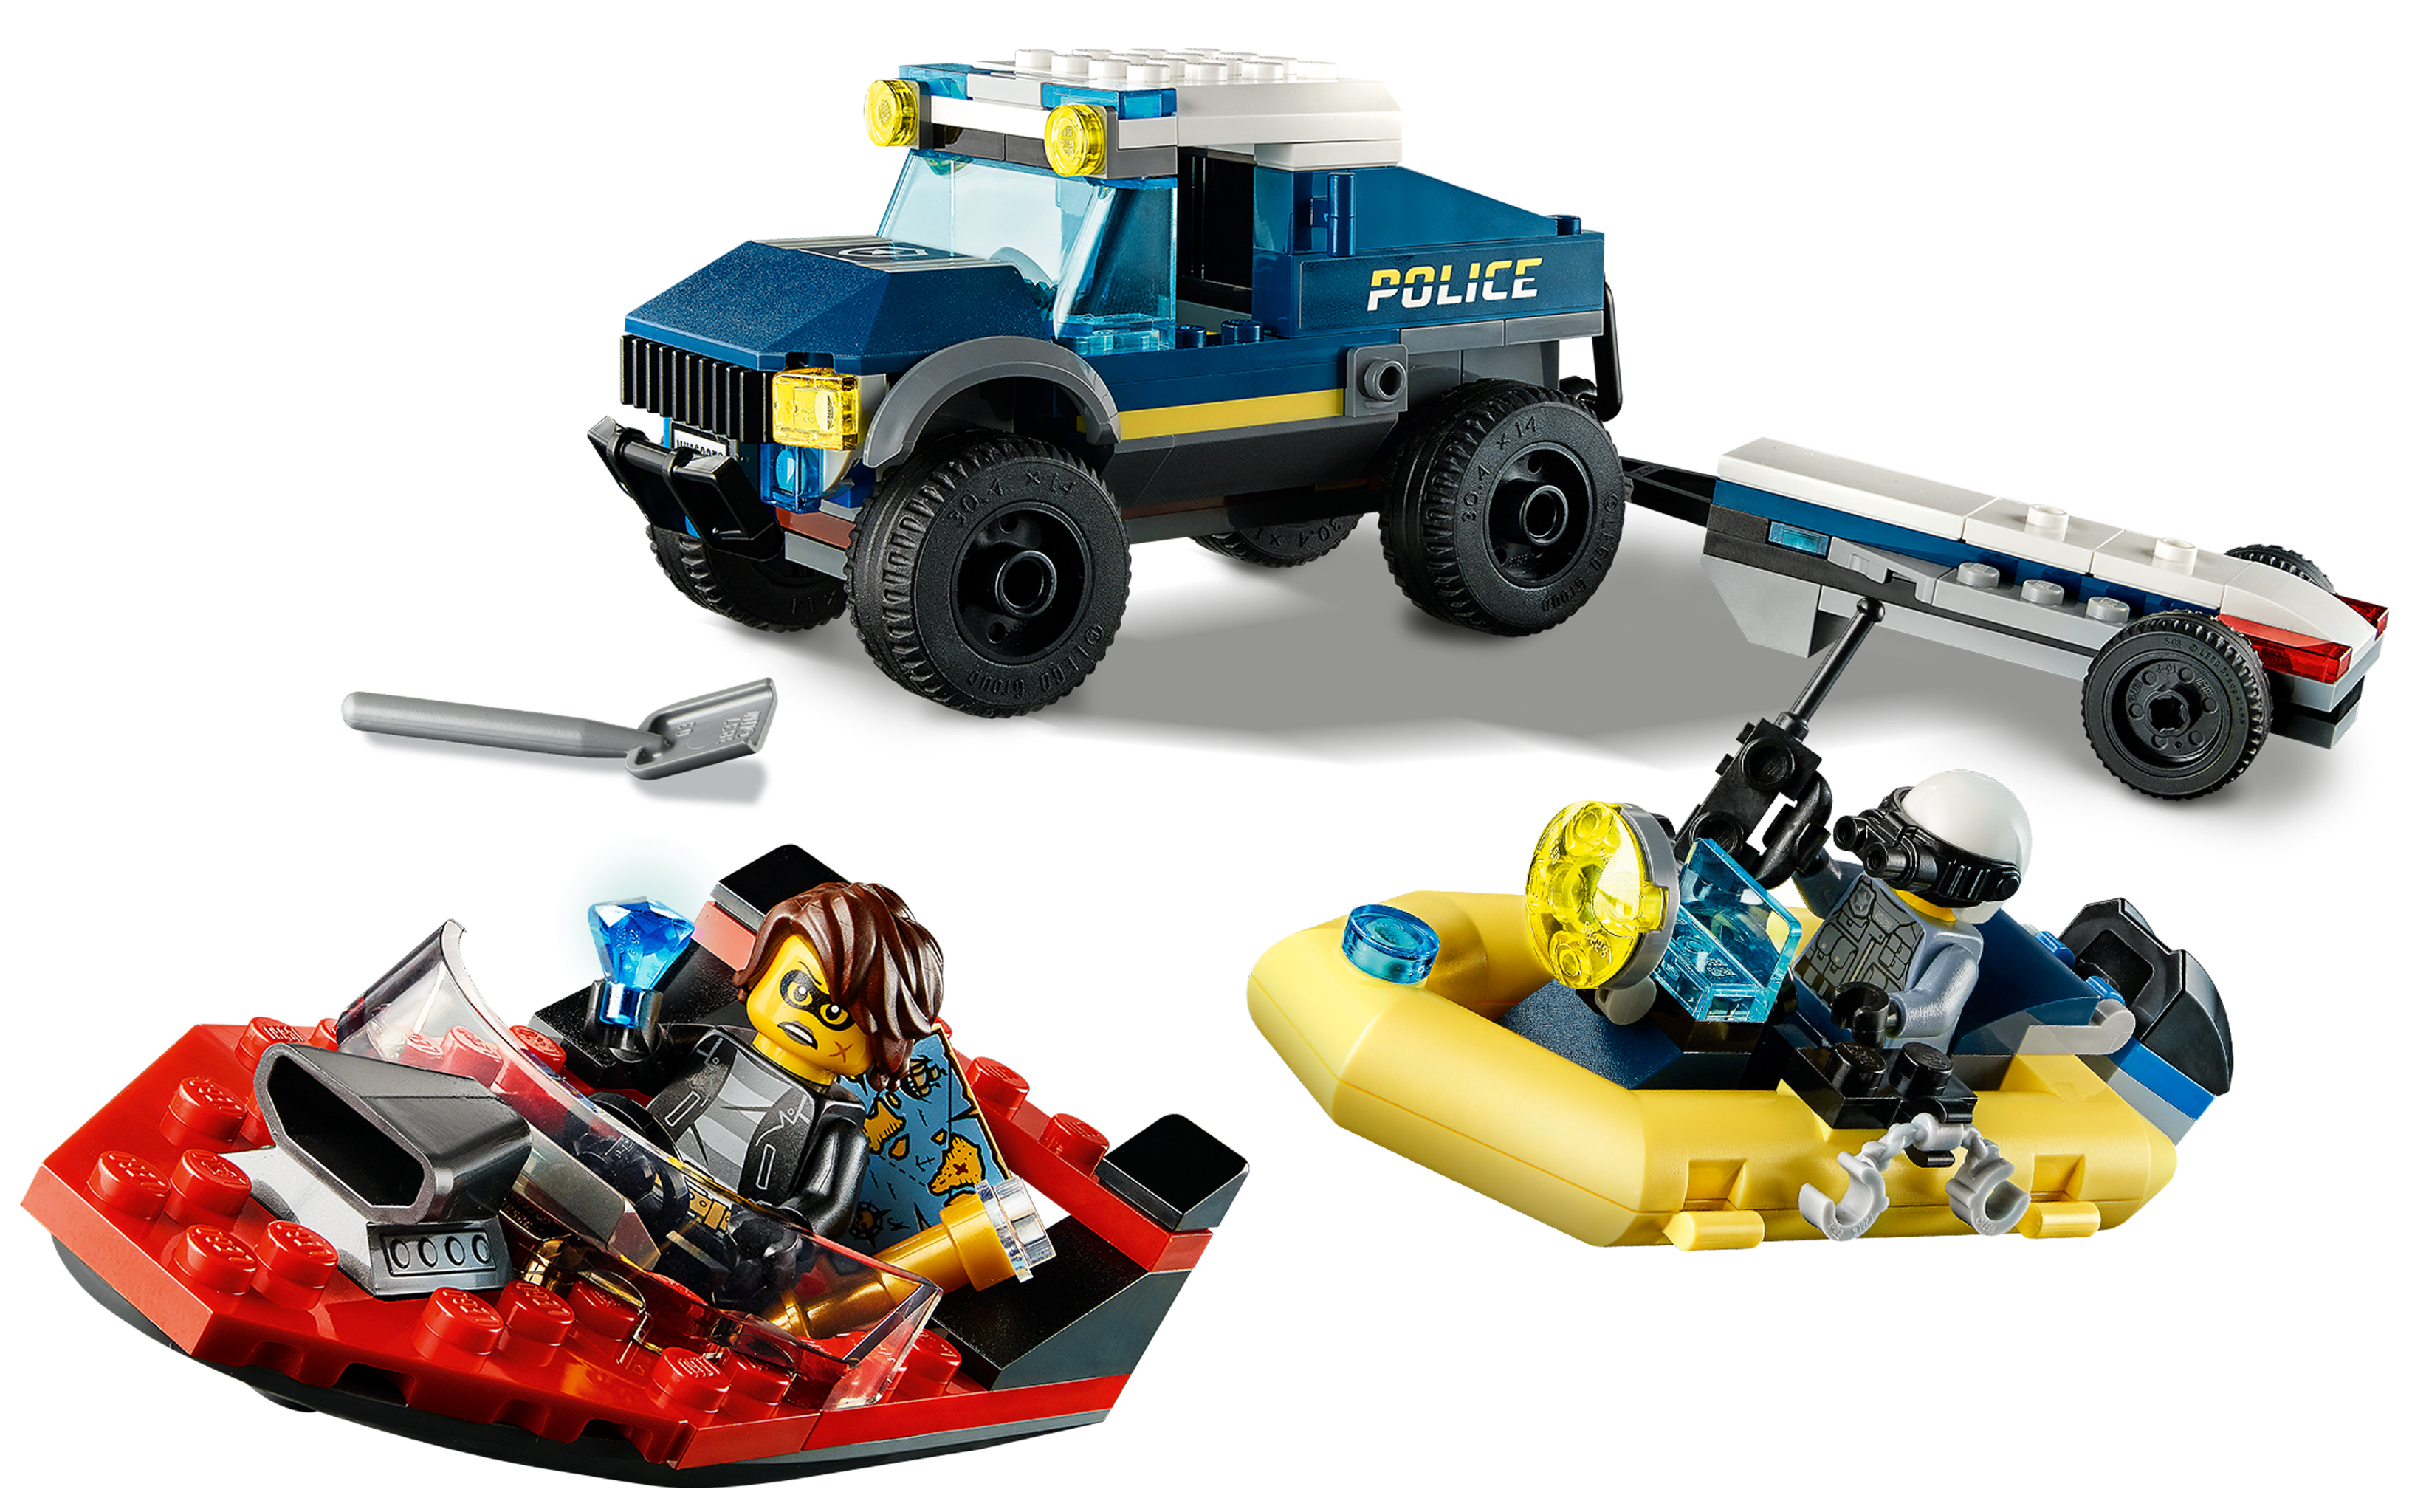 166 pcs Sealed Building Toy New LEGO City 60272 Police Boat Transport 5 